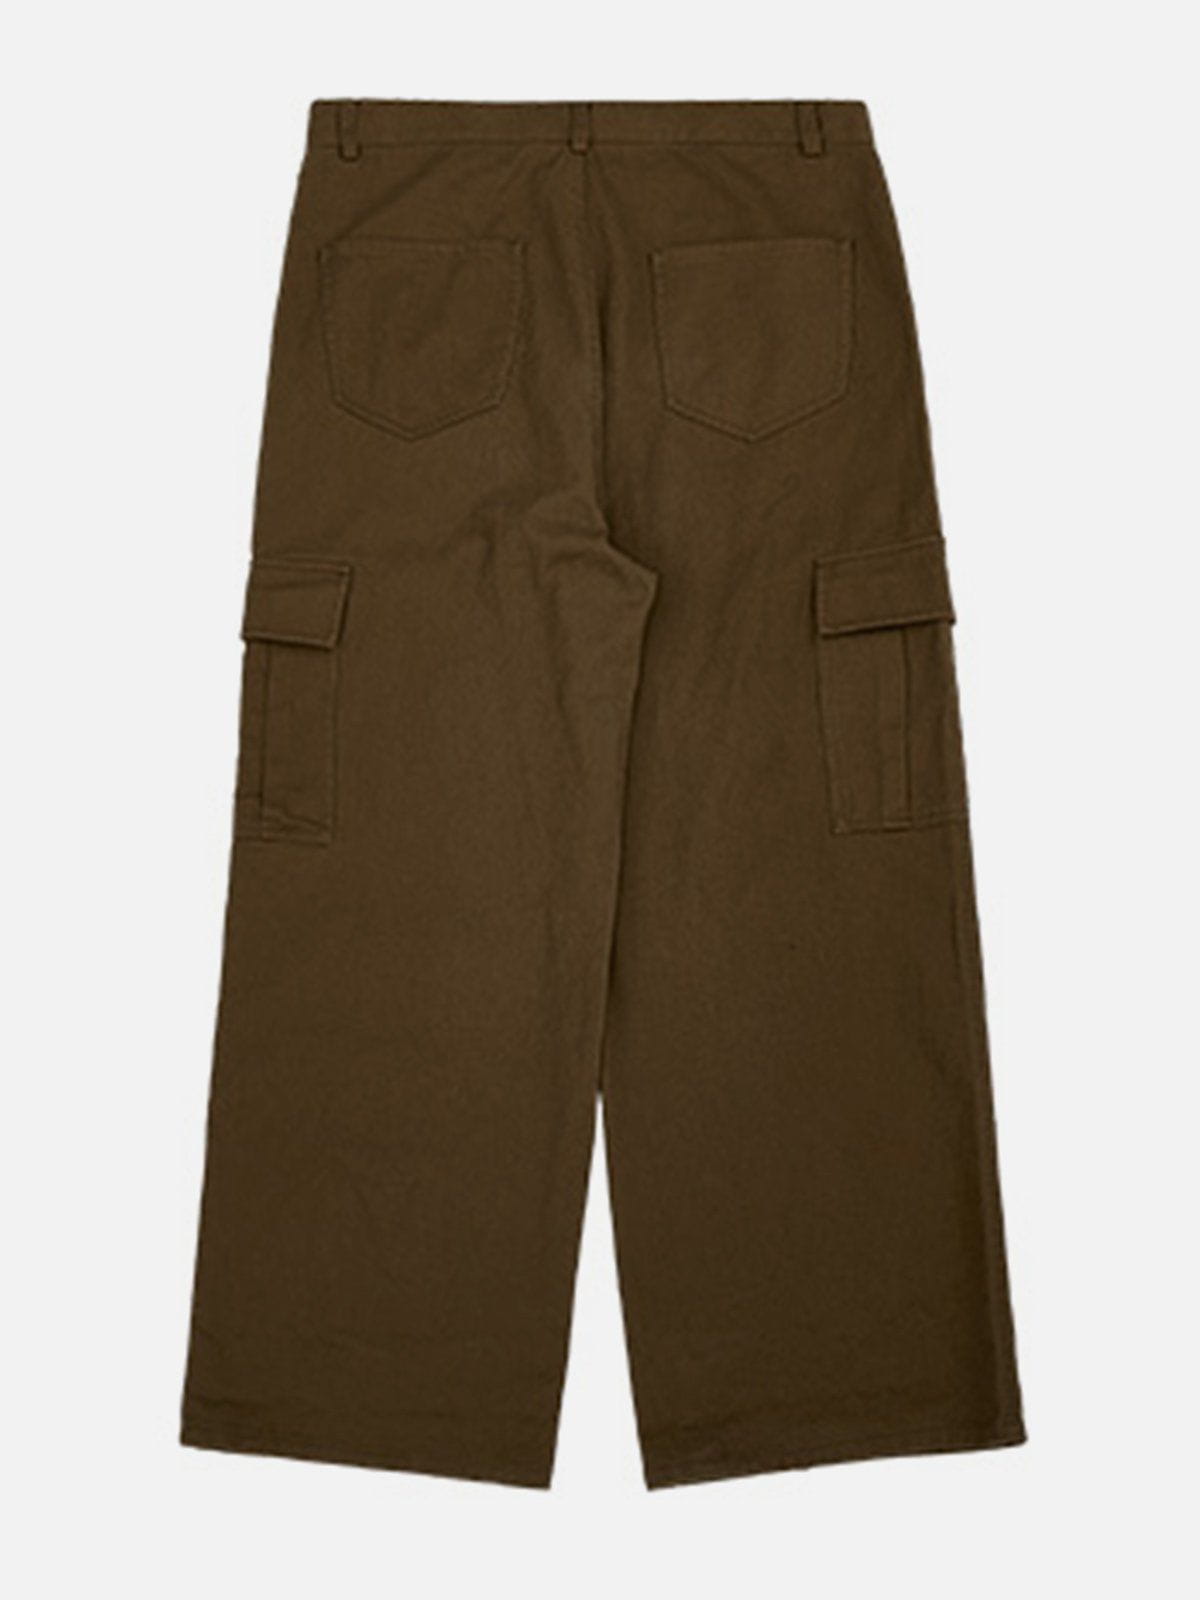 Majesda® - Multi-Pocket Wide Leg Cargo Pants outfit ideas streetwear fashion